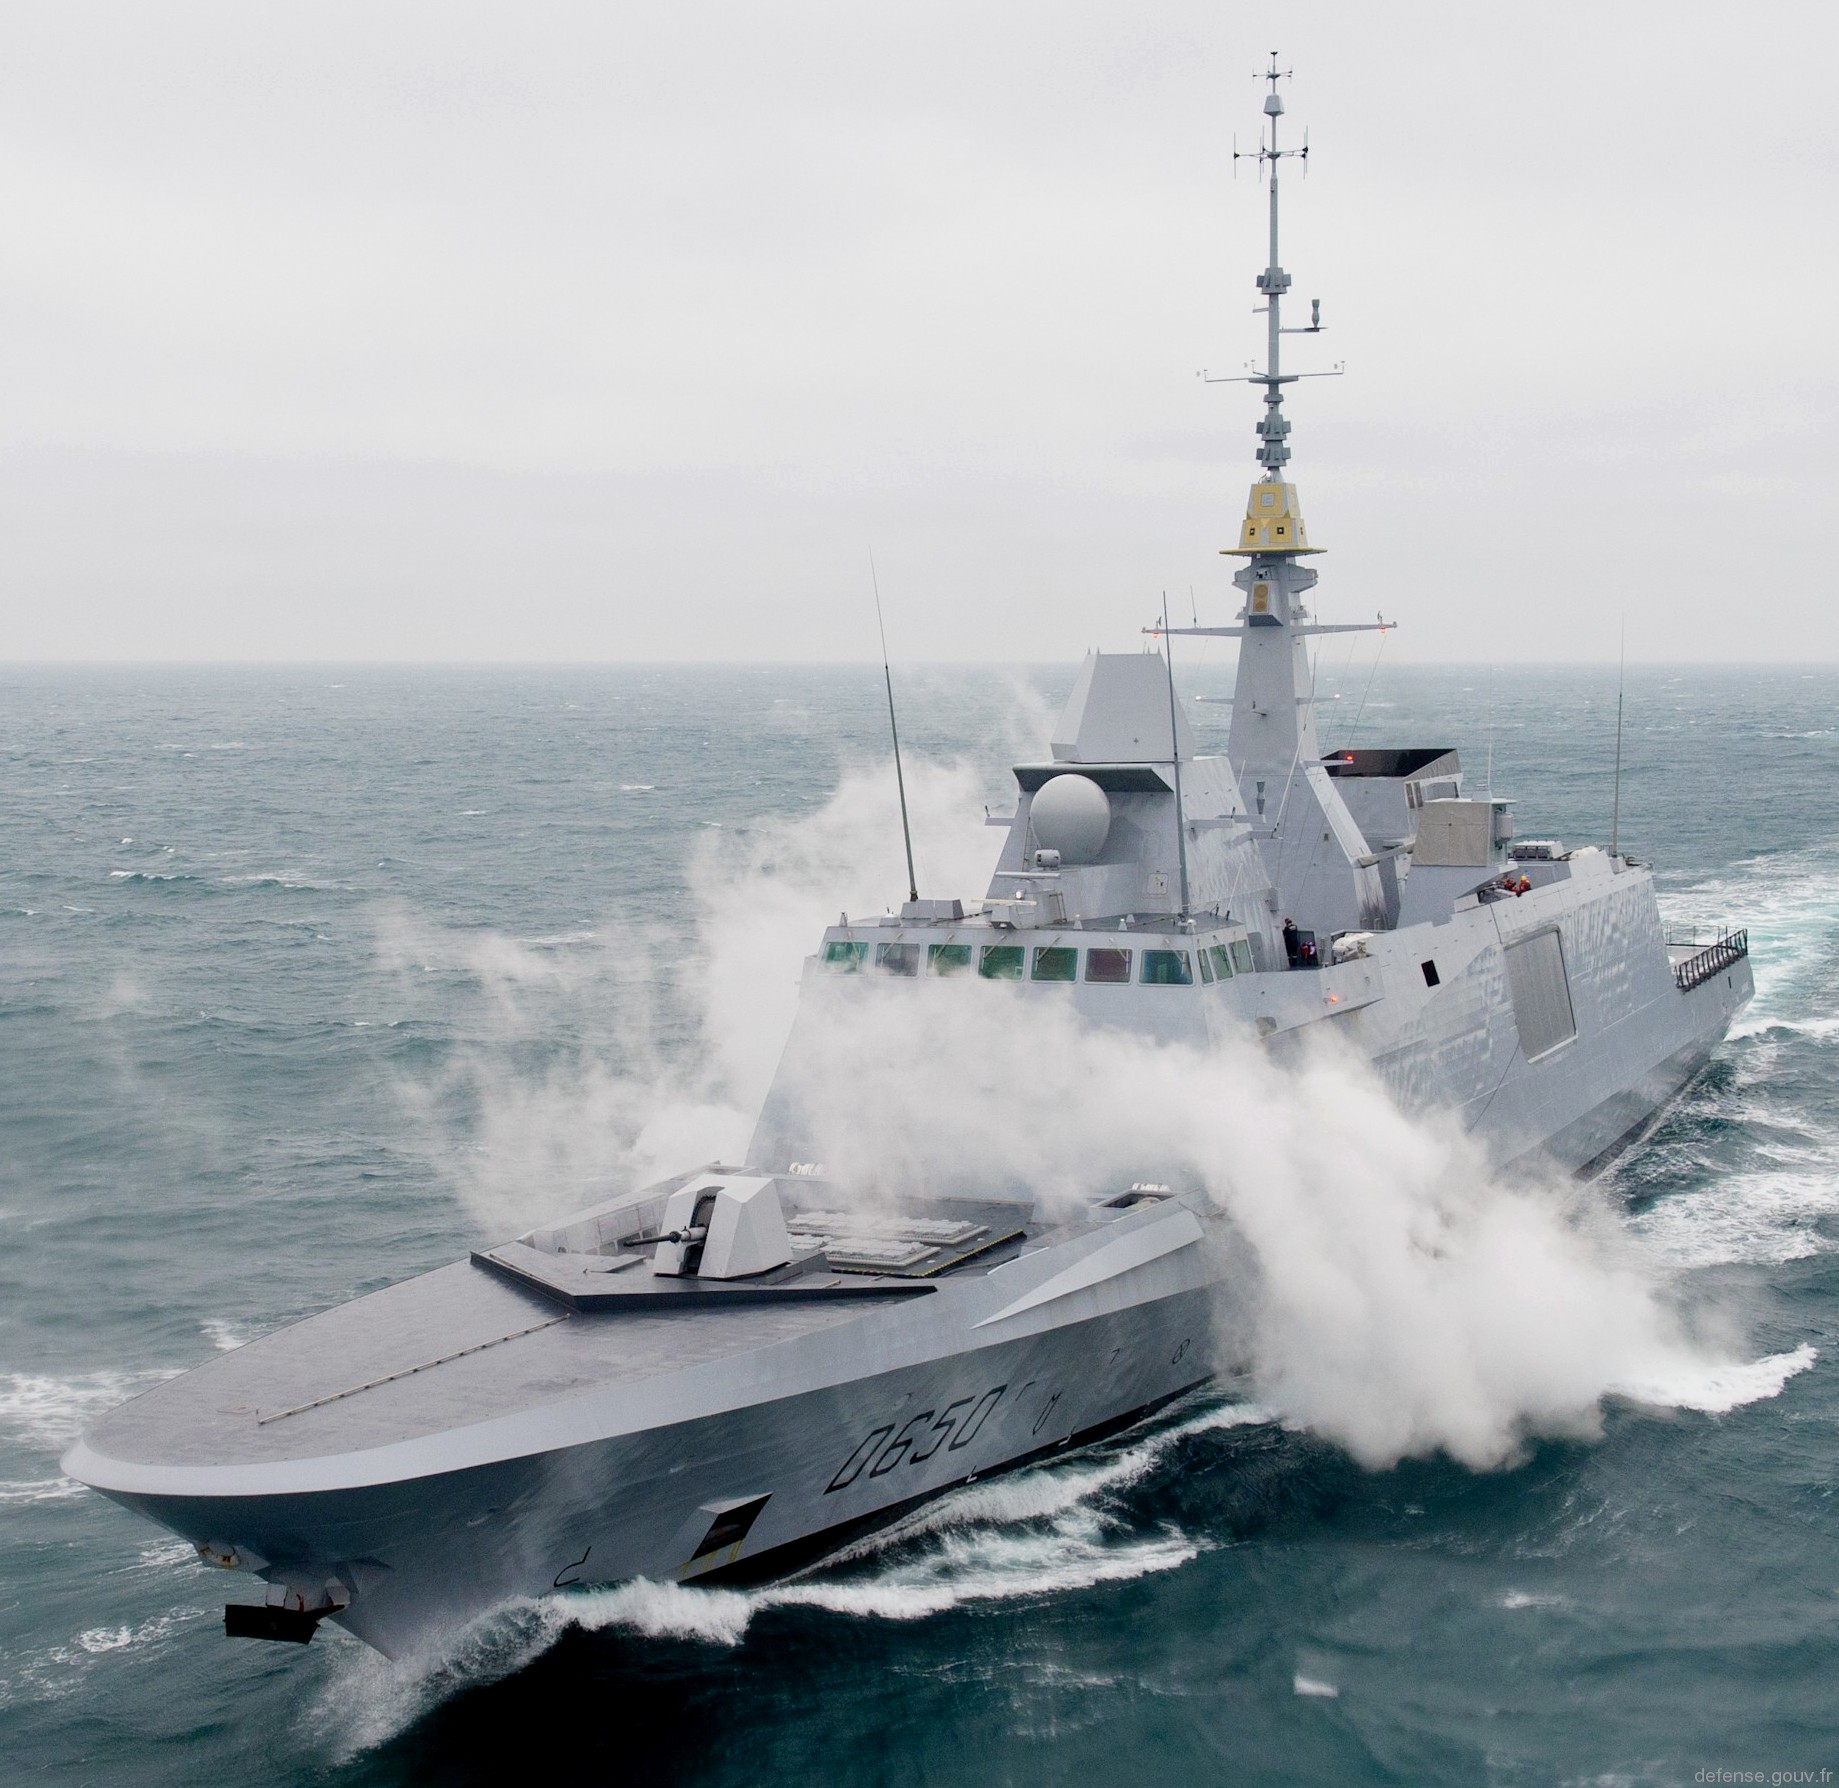 d-650 fs aquitaine fremm class frigate fregate multi purpose french navy marine nationale 14